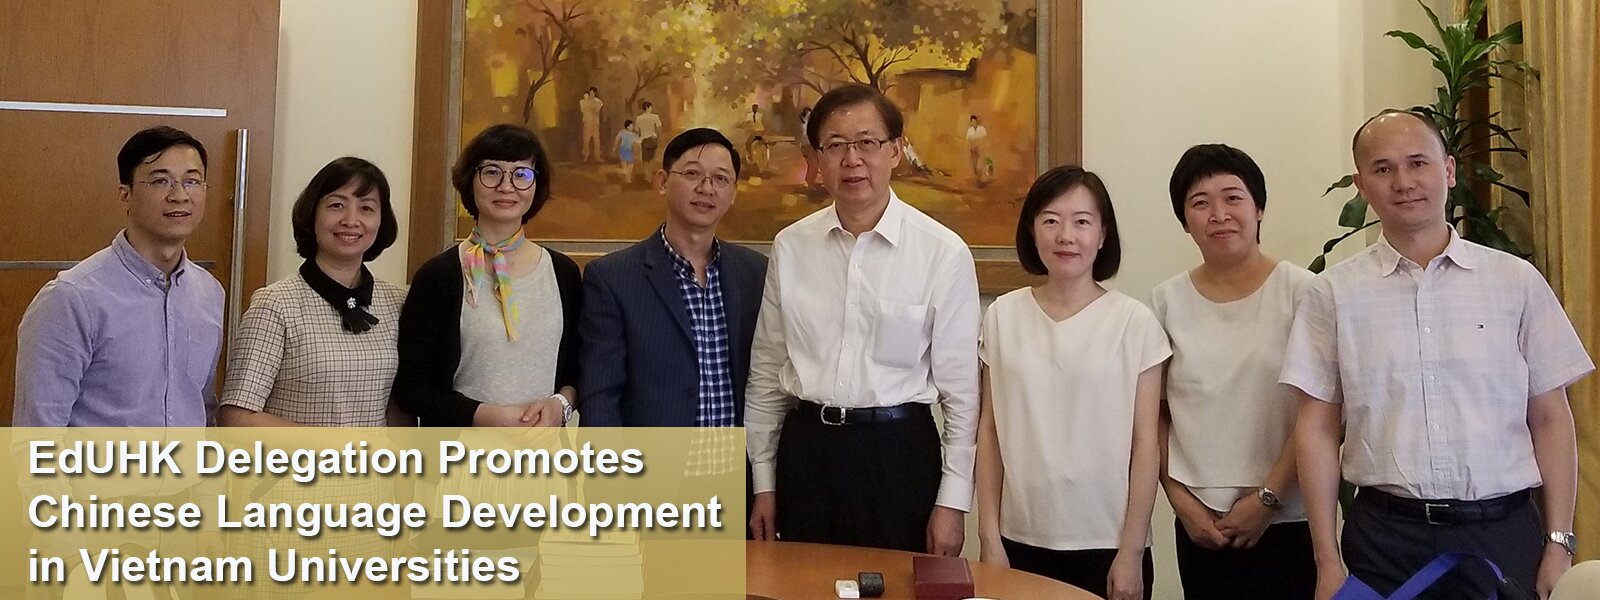 EdUHK Delegation Promotes Chinese Language Development in Vietnam Universities